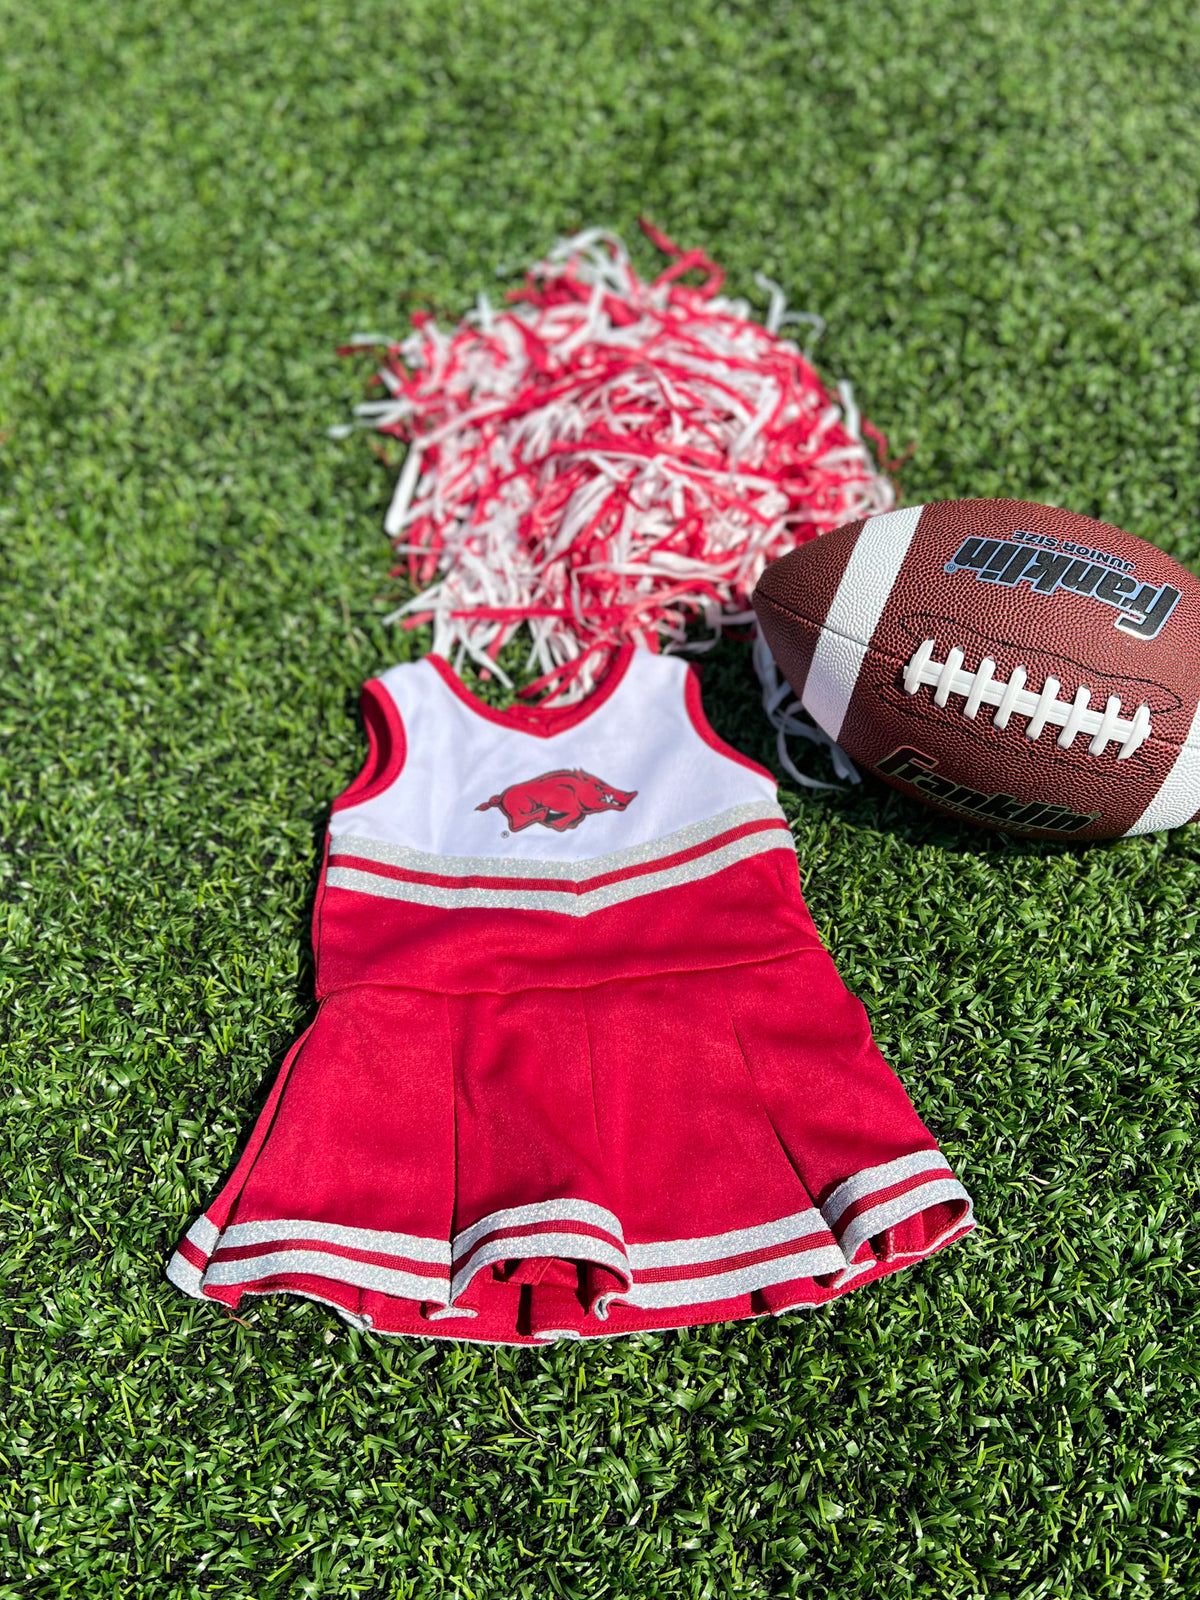 Arkansas Razorback Baby Cheer Uniform – Dales Clothing Inc